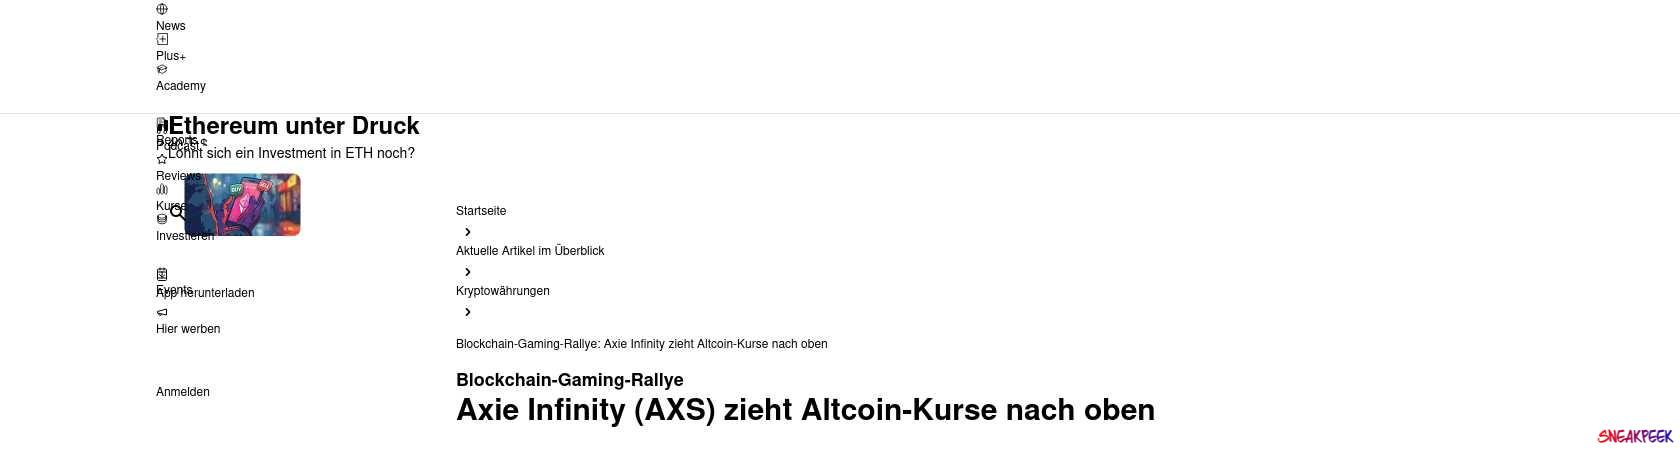 Read the full Article:  ⭲ Blockchain-Gaming-Rallye: Axie Infinity zieht Altcoin-Kurse nach oben